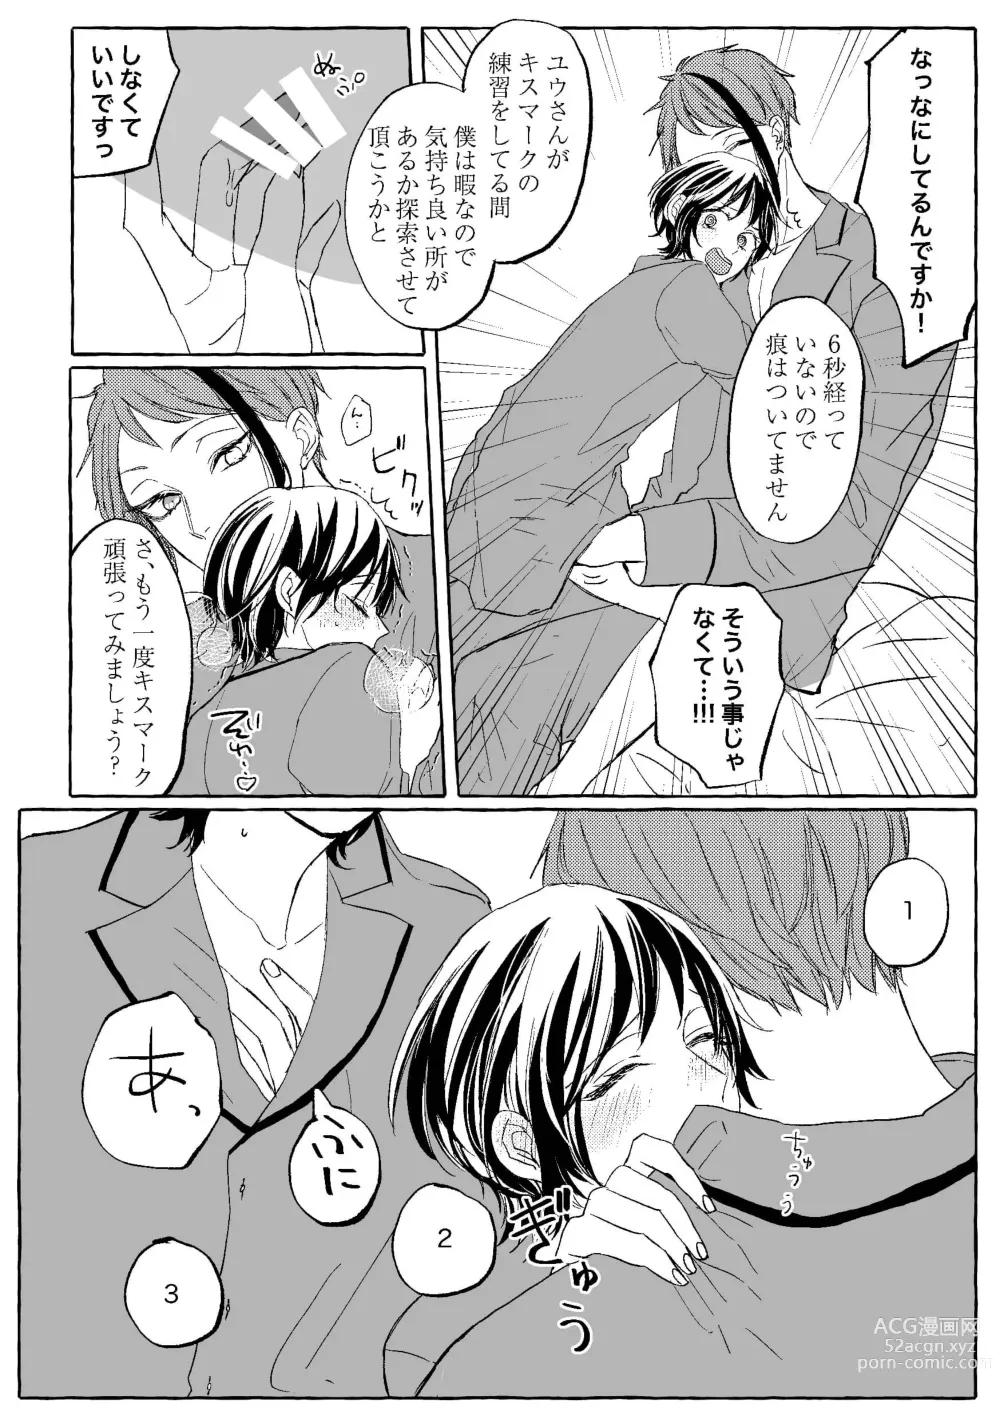 Page 135 of doujinshi Teenage Dream